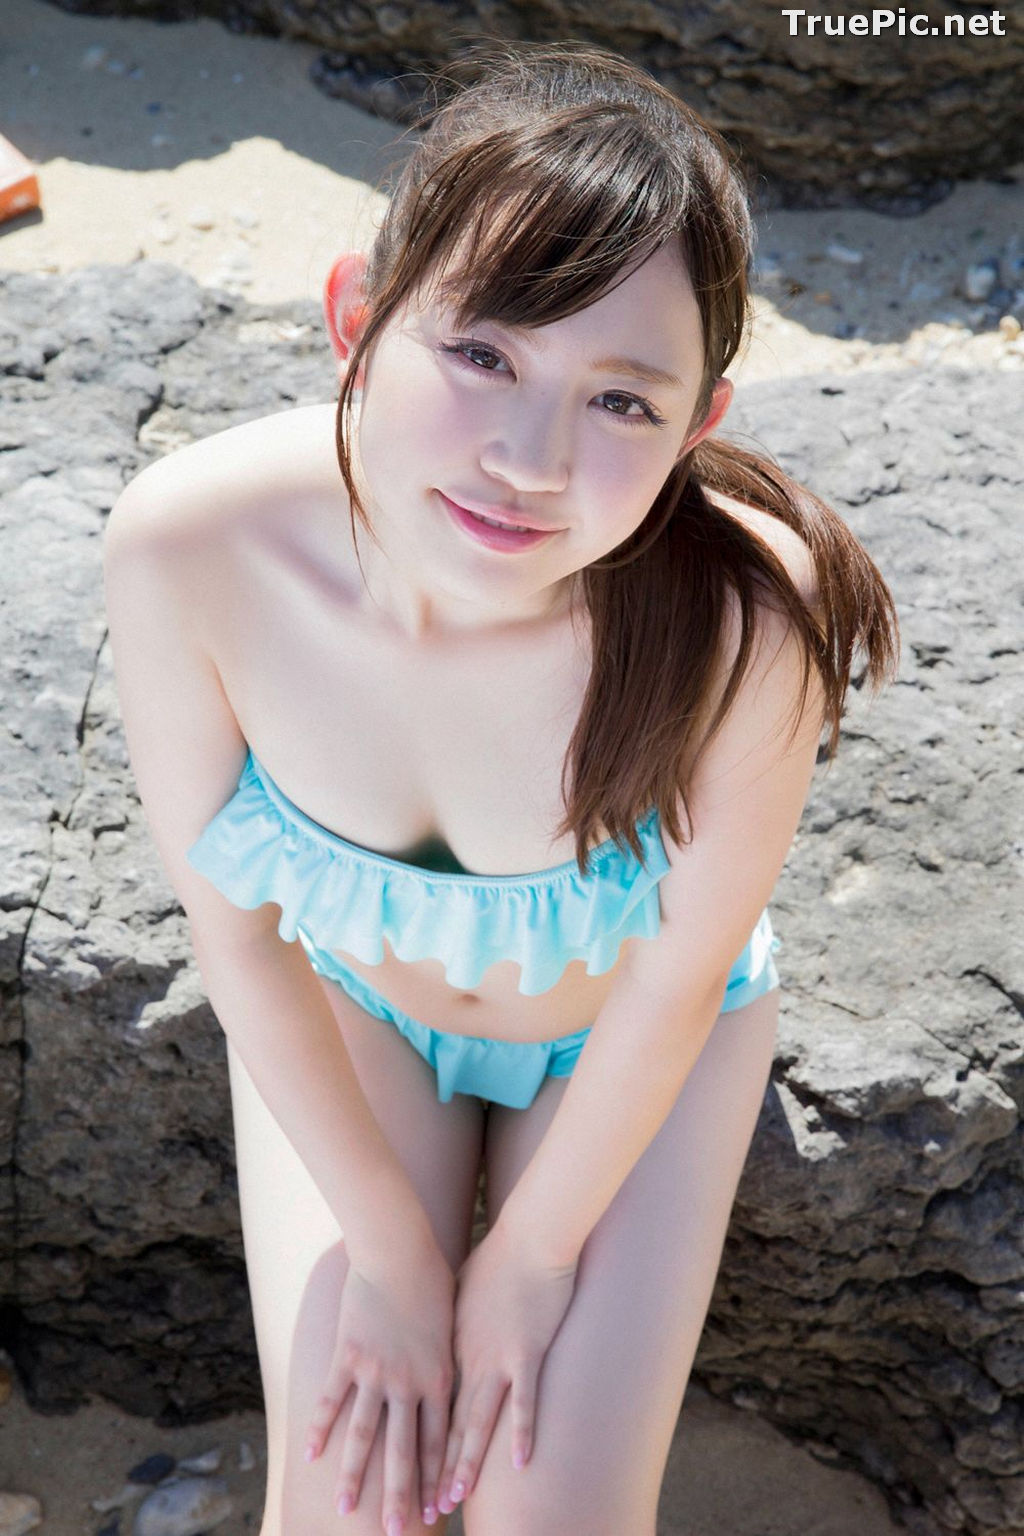 Image YS-Web Vol.619 - Japanese Tarento and Gravure Idol - Sakura Araki - TruePic.net - Picture-27